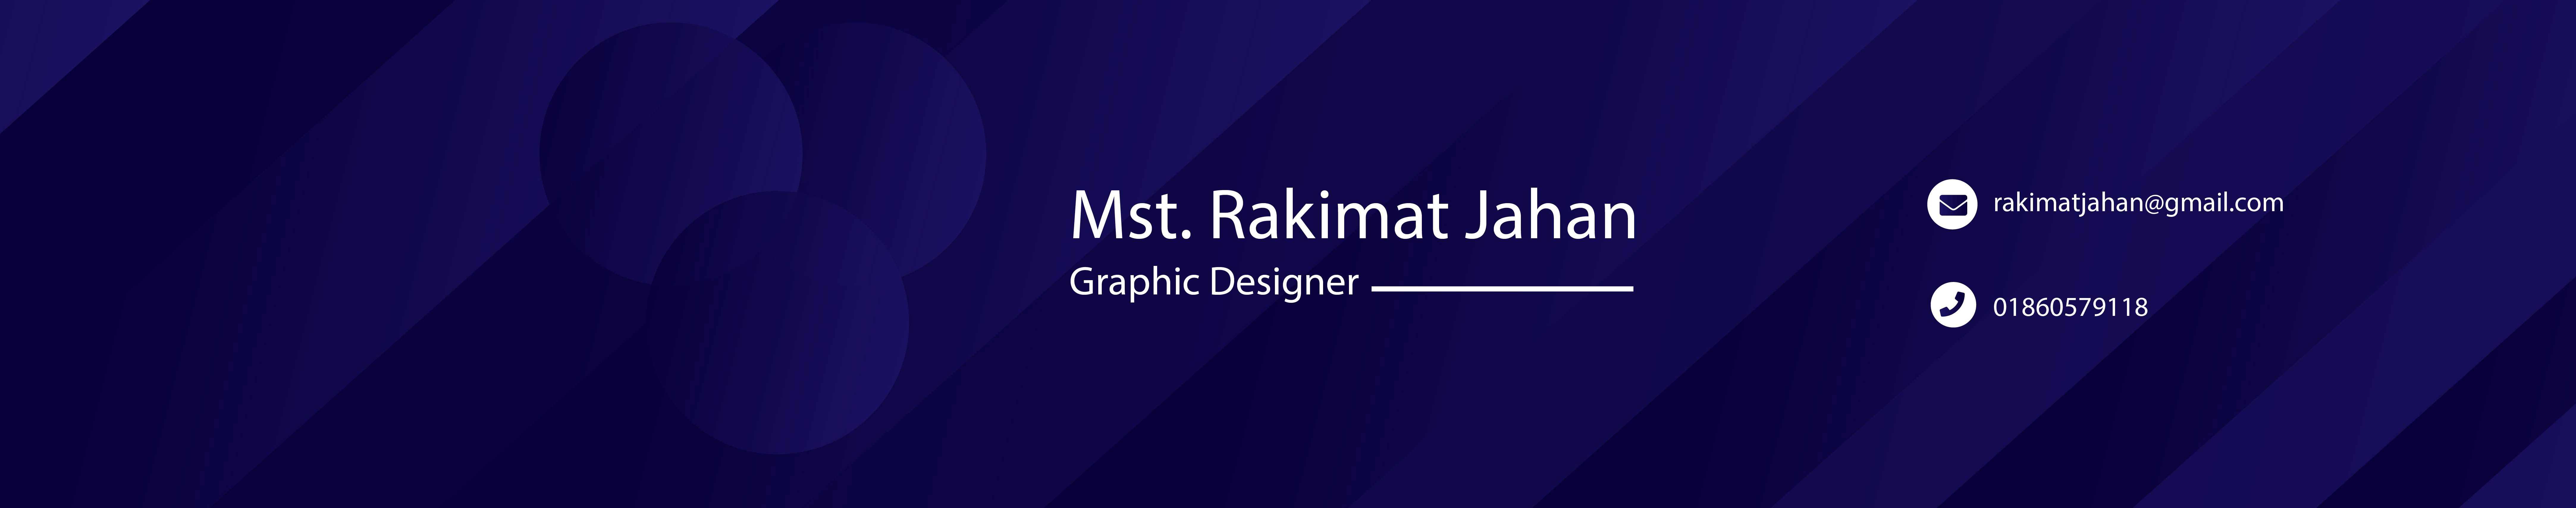 Mst. Rakimat Jahan's profile banner